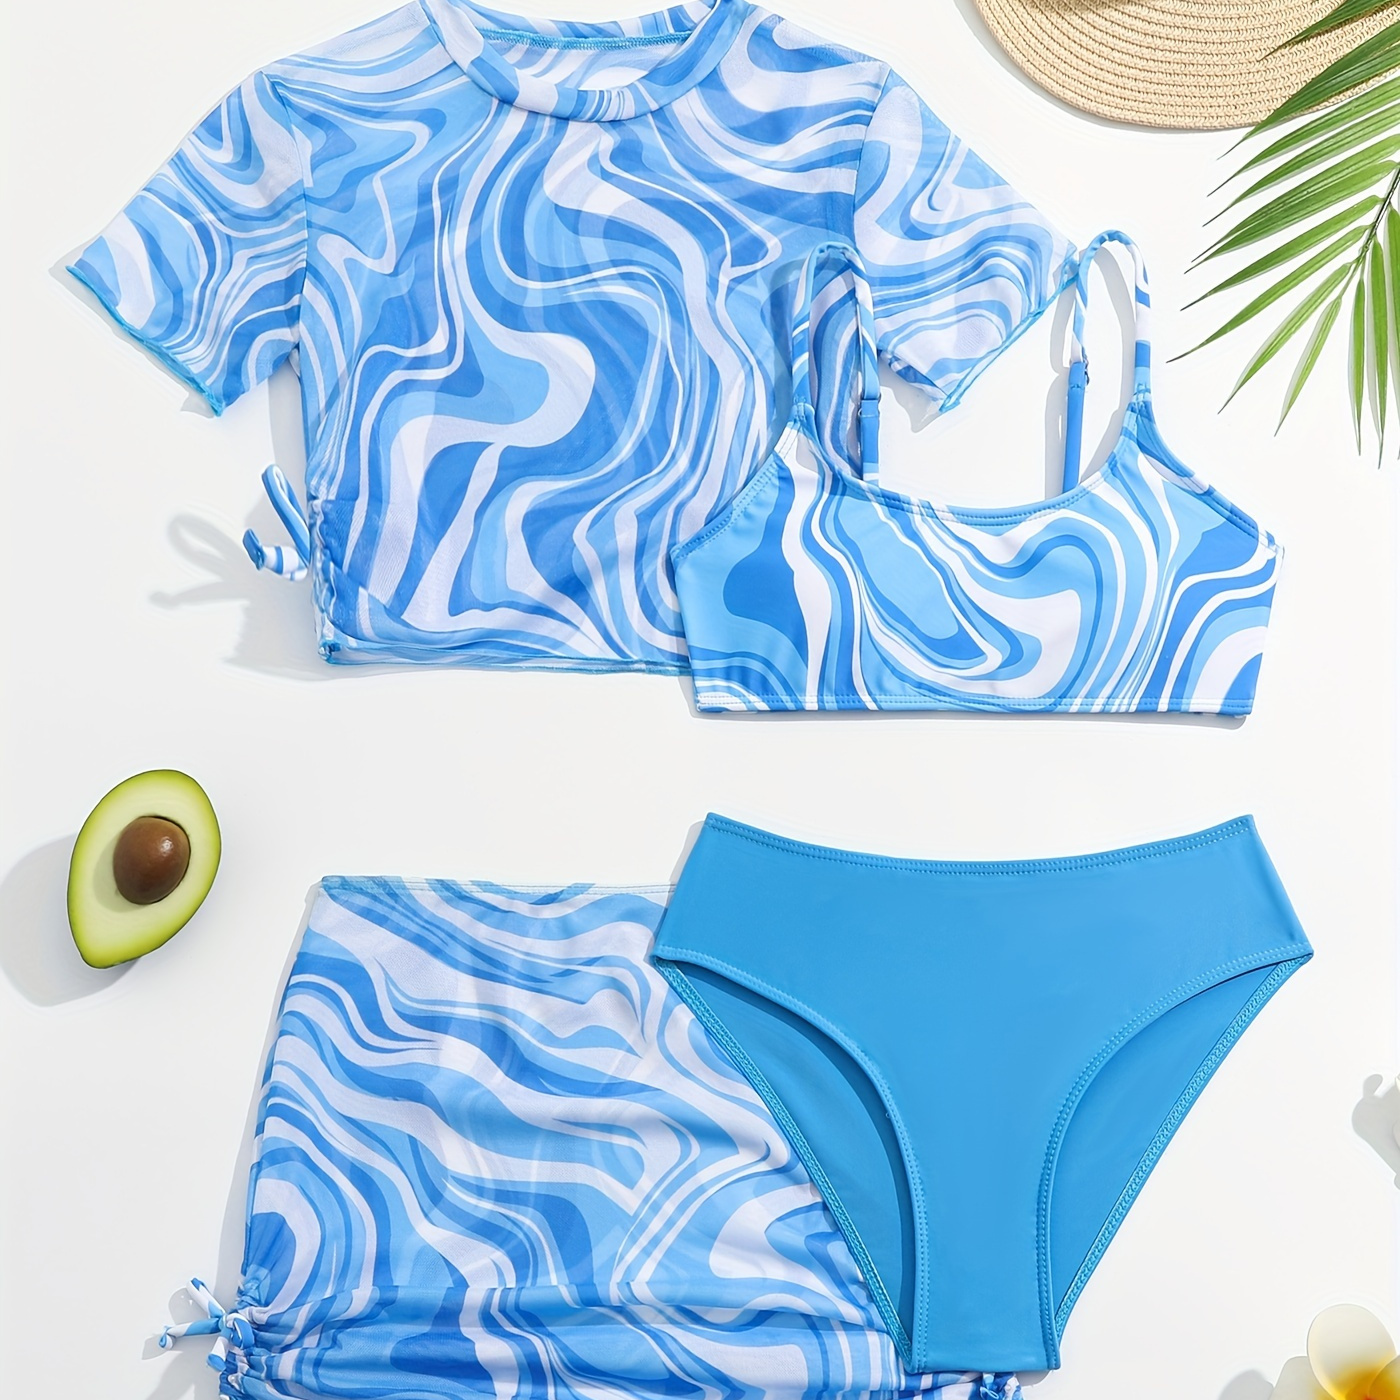 

4-piece Swimsuit Girl's Ocean Waves Print Bikini Set, Mesh Cover-up Top + Skirt Swimwear Set, Pool/beach Swimming Bathing Suits